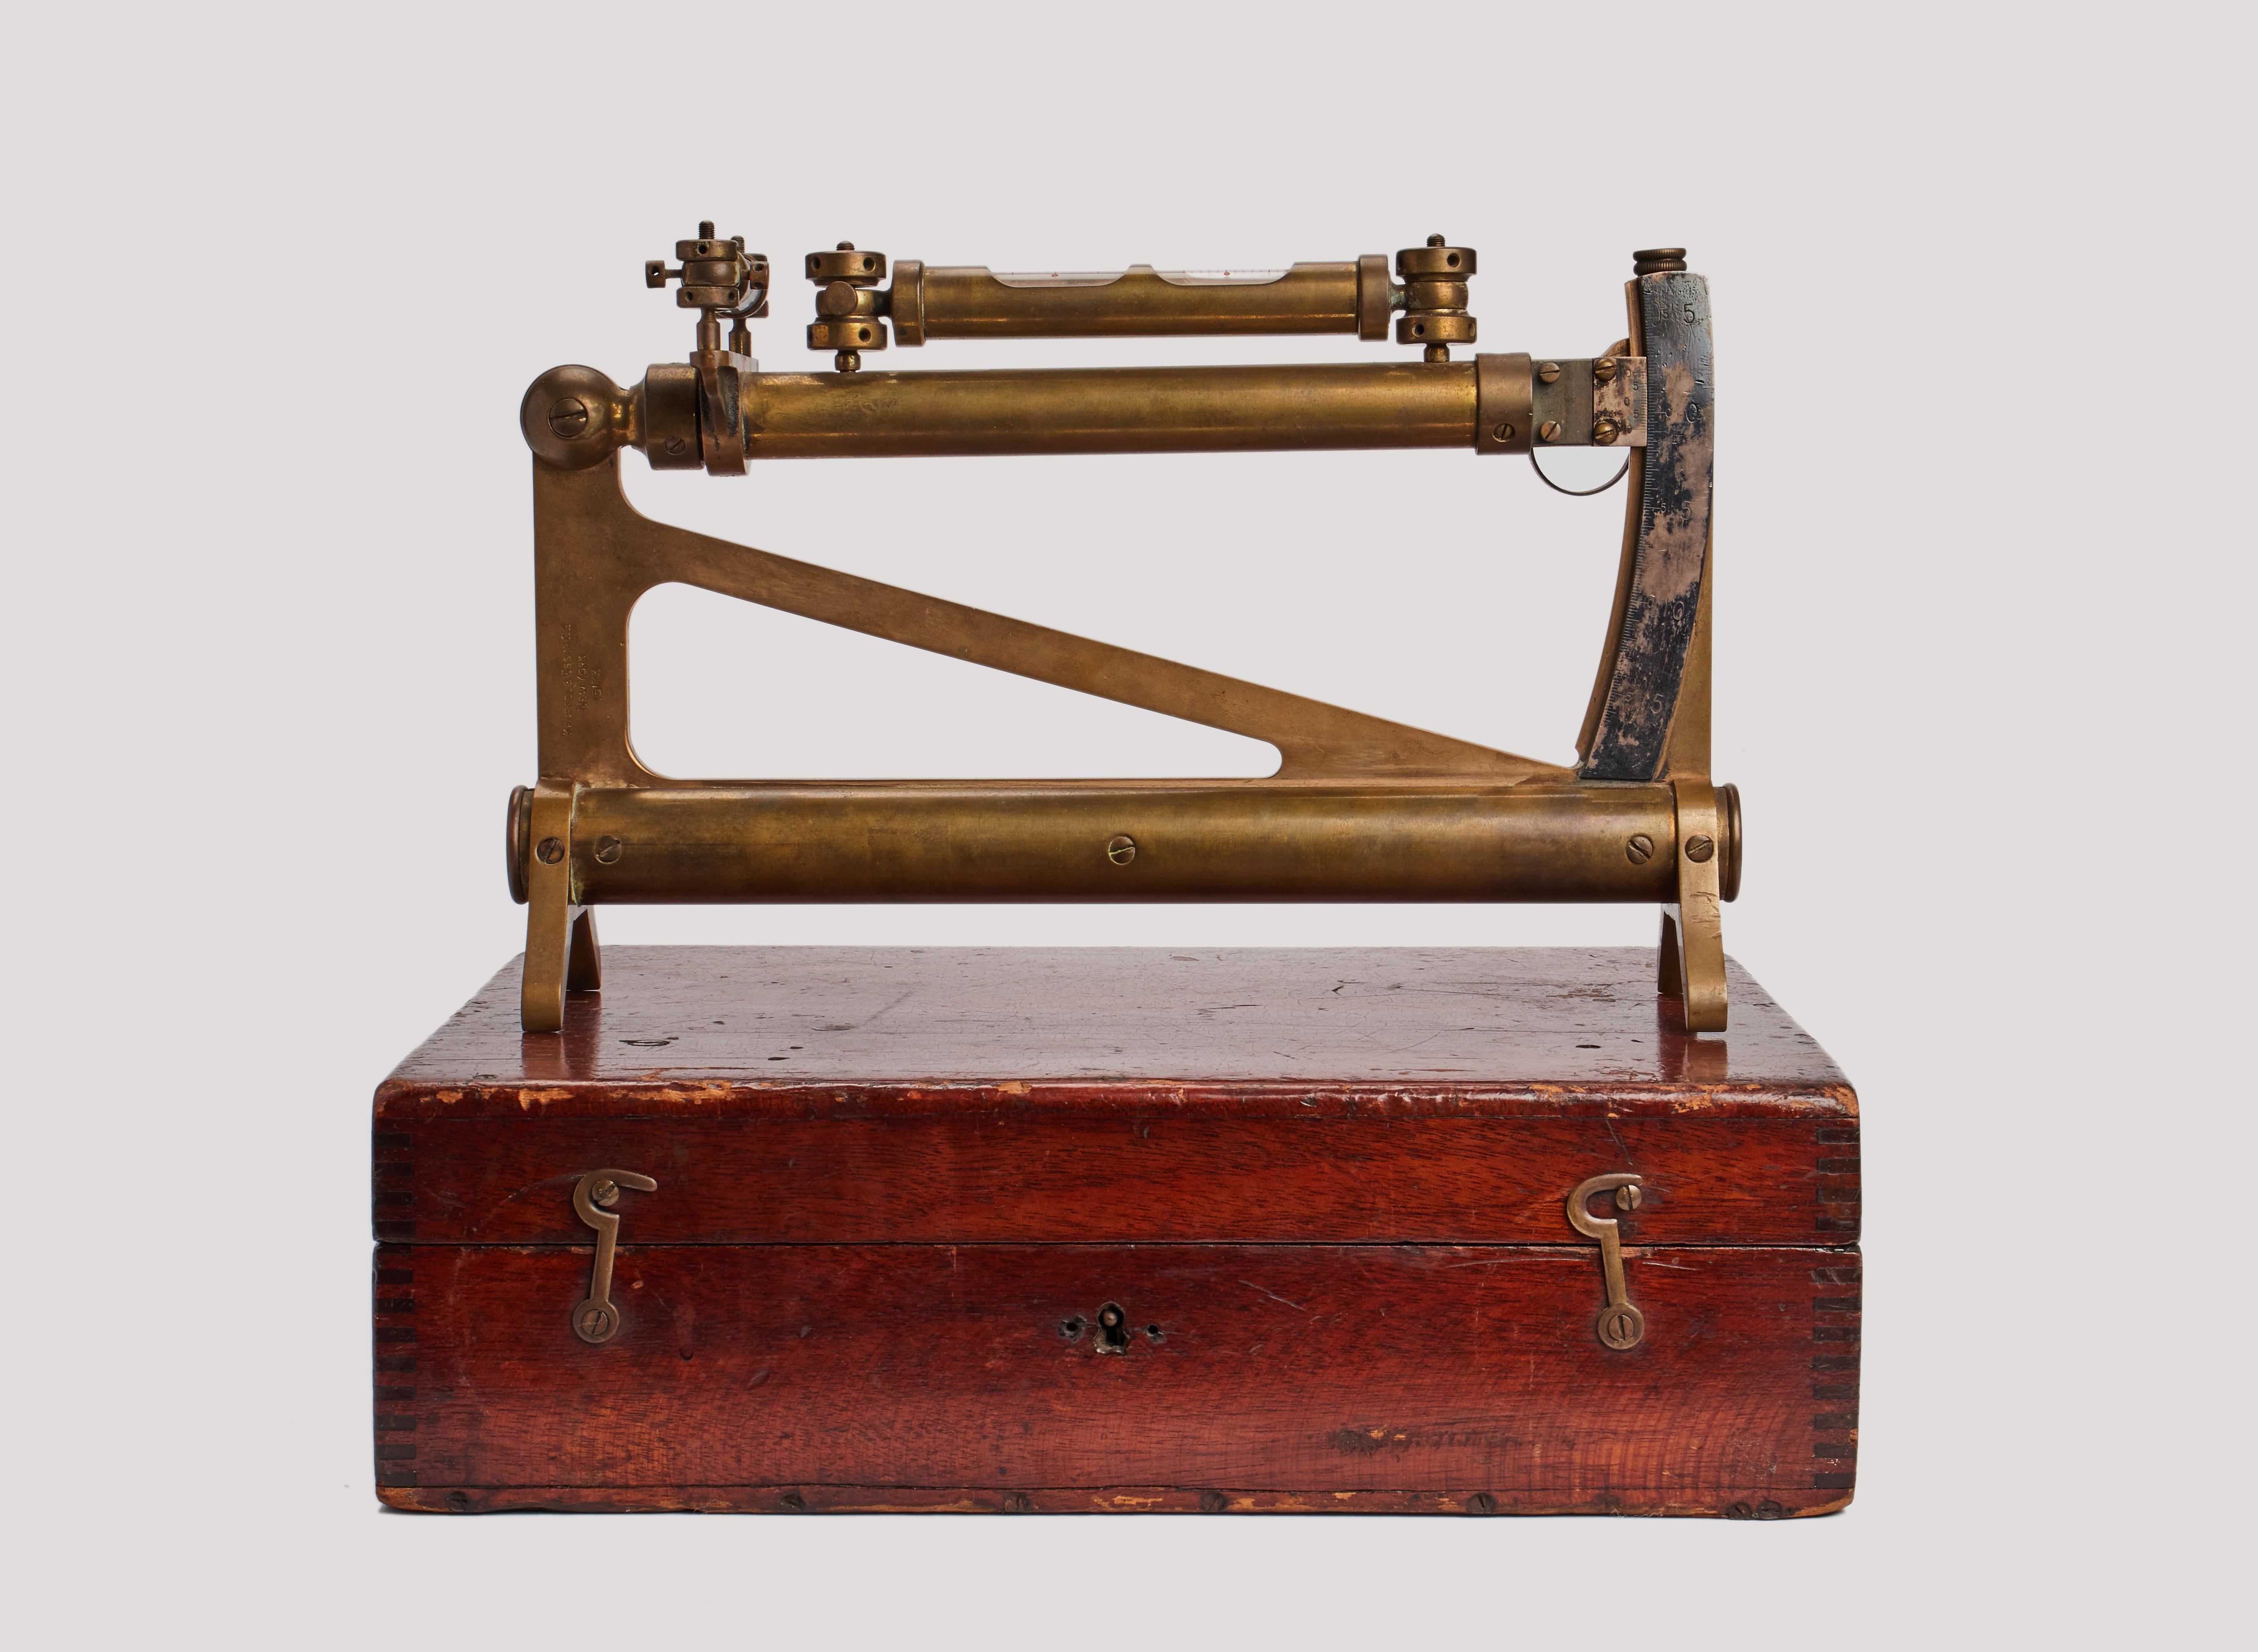 Architect or engineer portable compound lever. Wood, brass, glass. Original oak wood box. Keuffel Esser & Co, New York, NY USA. Second half of 19th century.